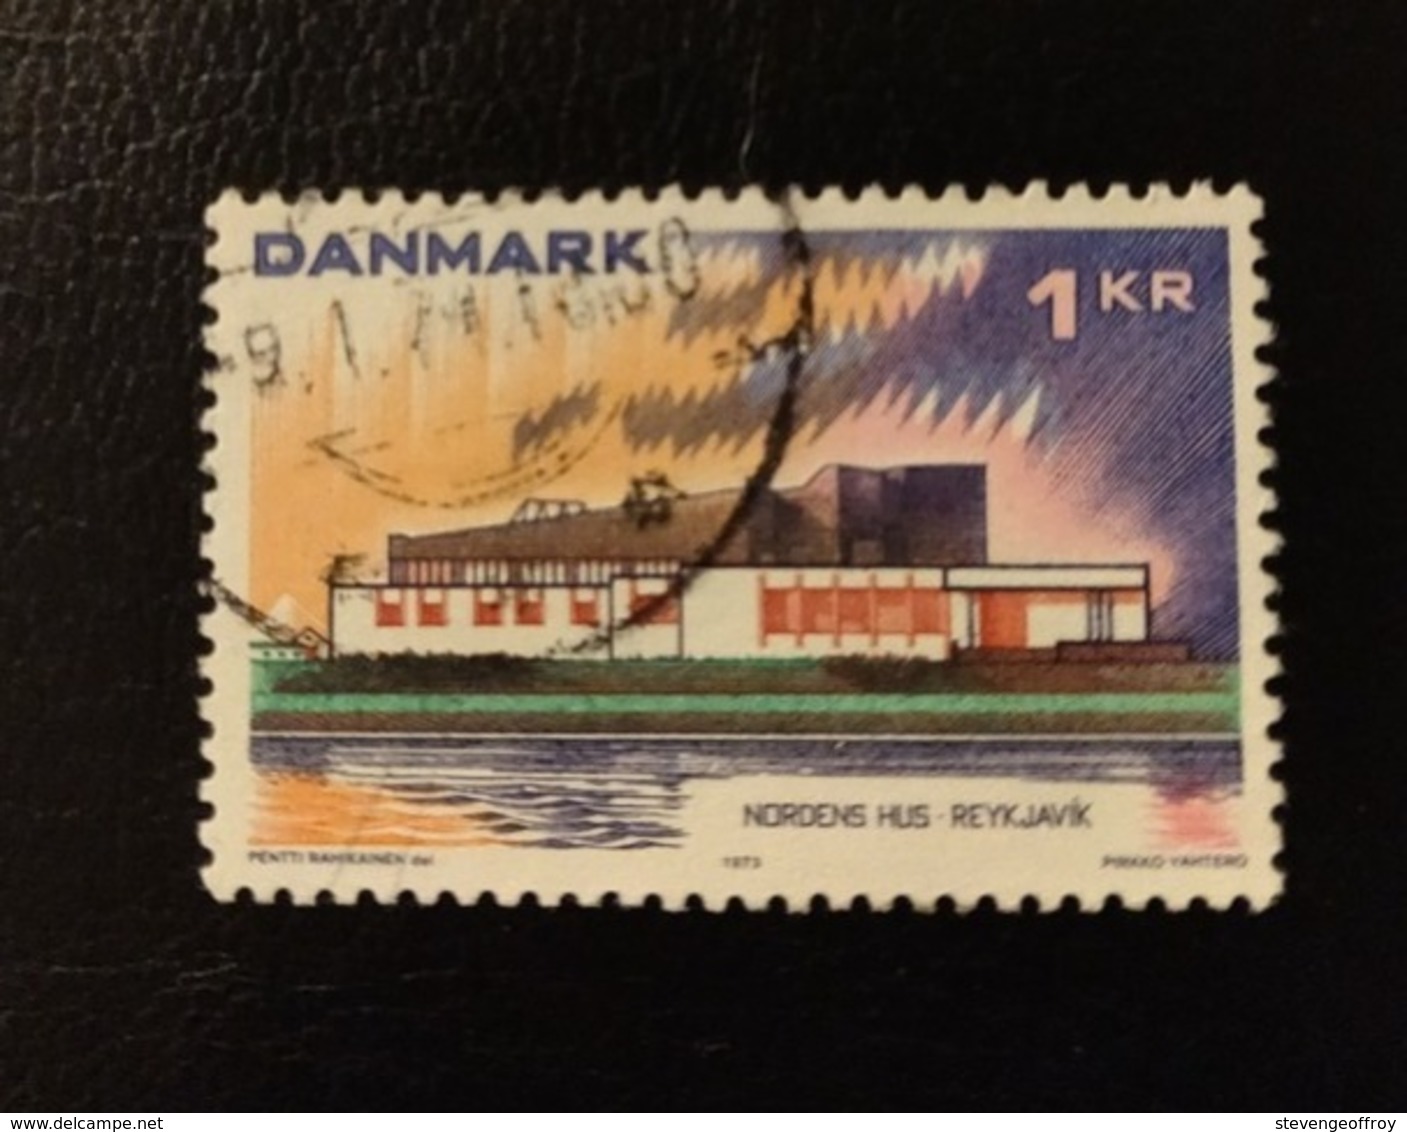 Danemark 1973 DK 555 Nordic House Reykjavik Iceland Bâtiments | Emissions Communes | Le Nord | Unions Postales - Oblitérés